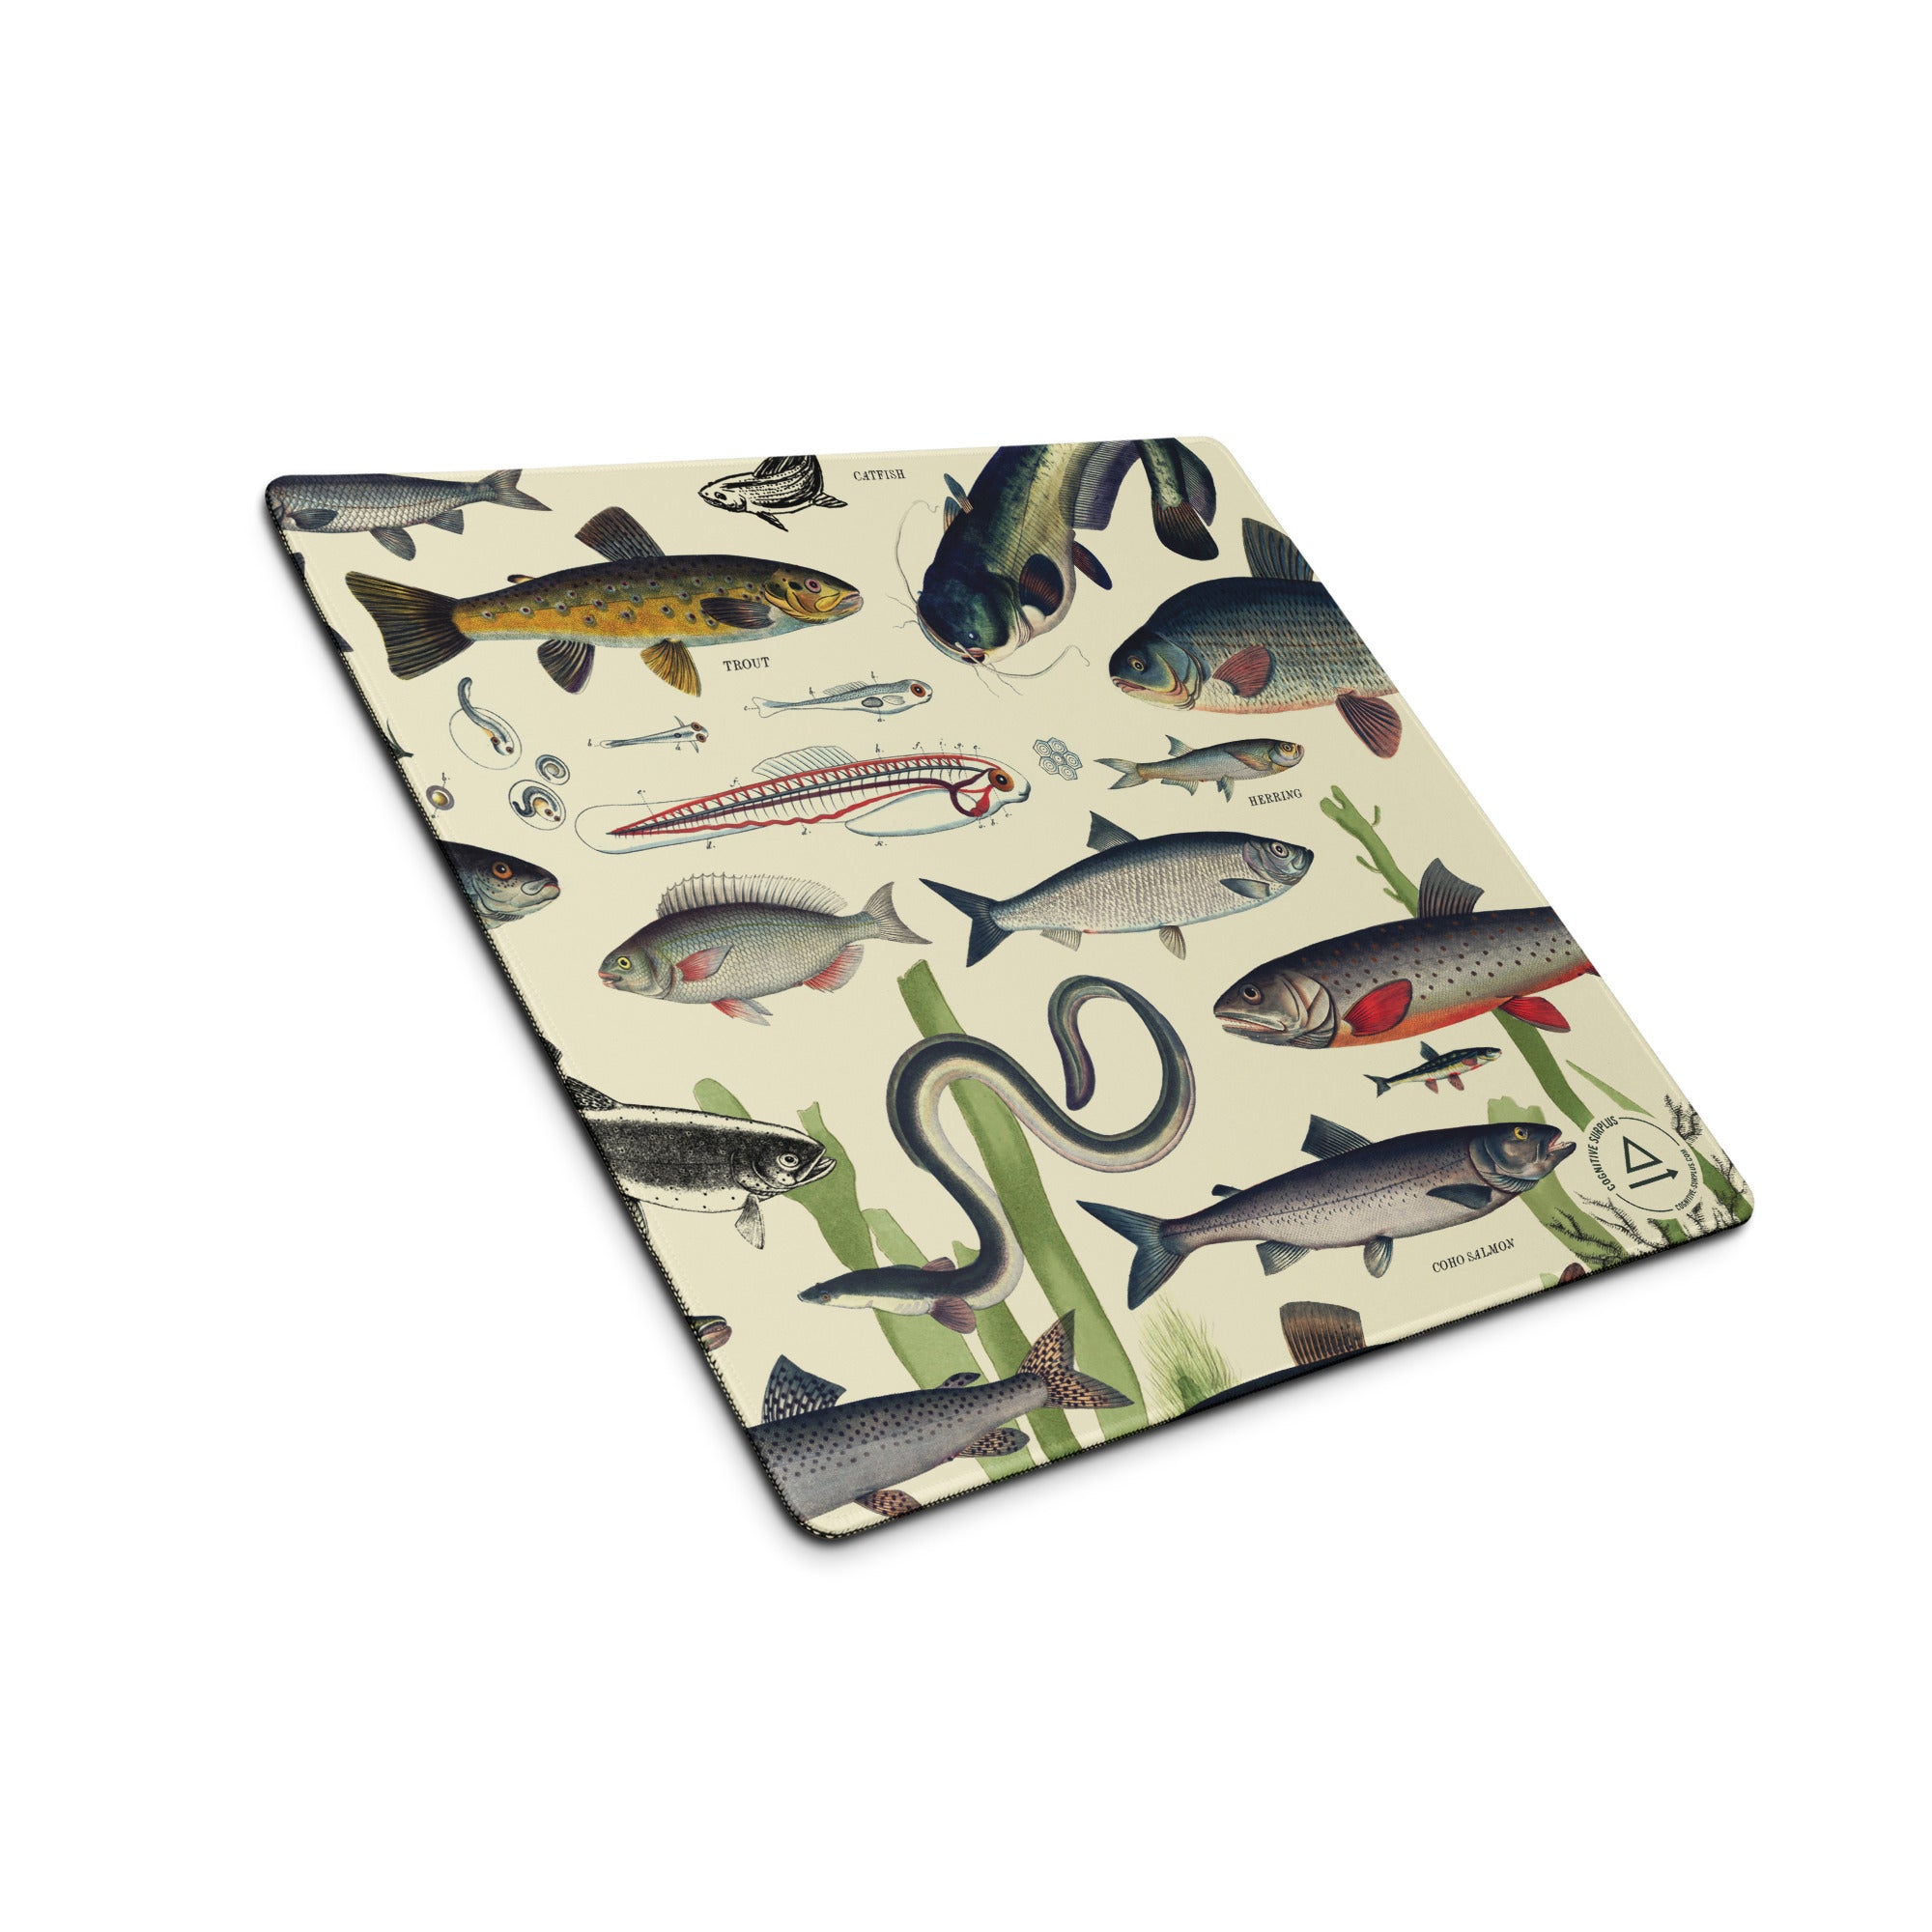 Freshwater Fish Gaming Mouse Pad